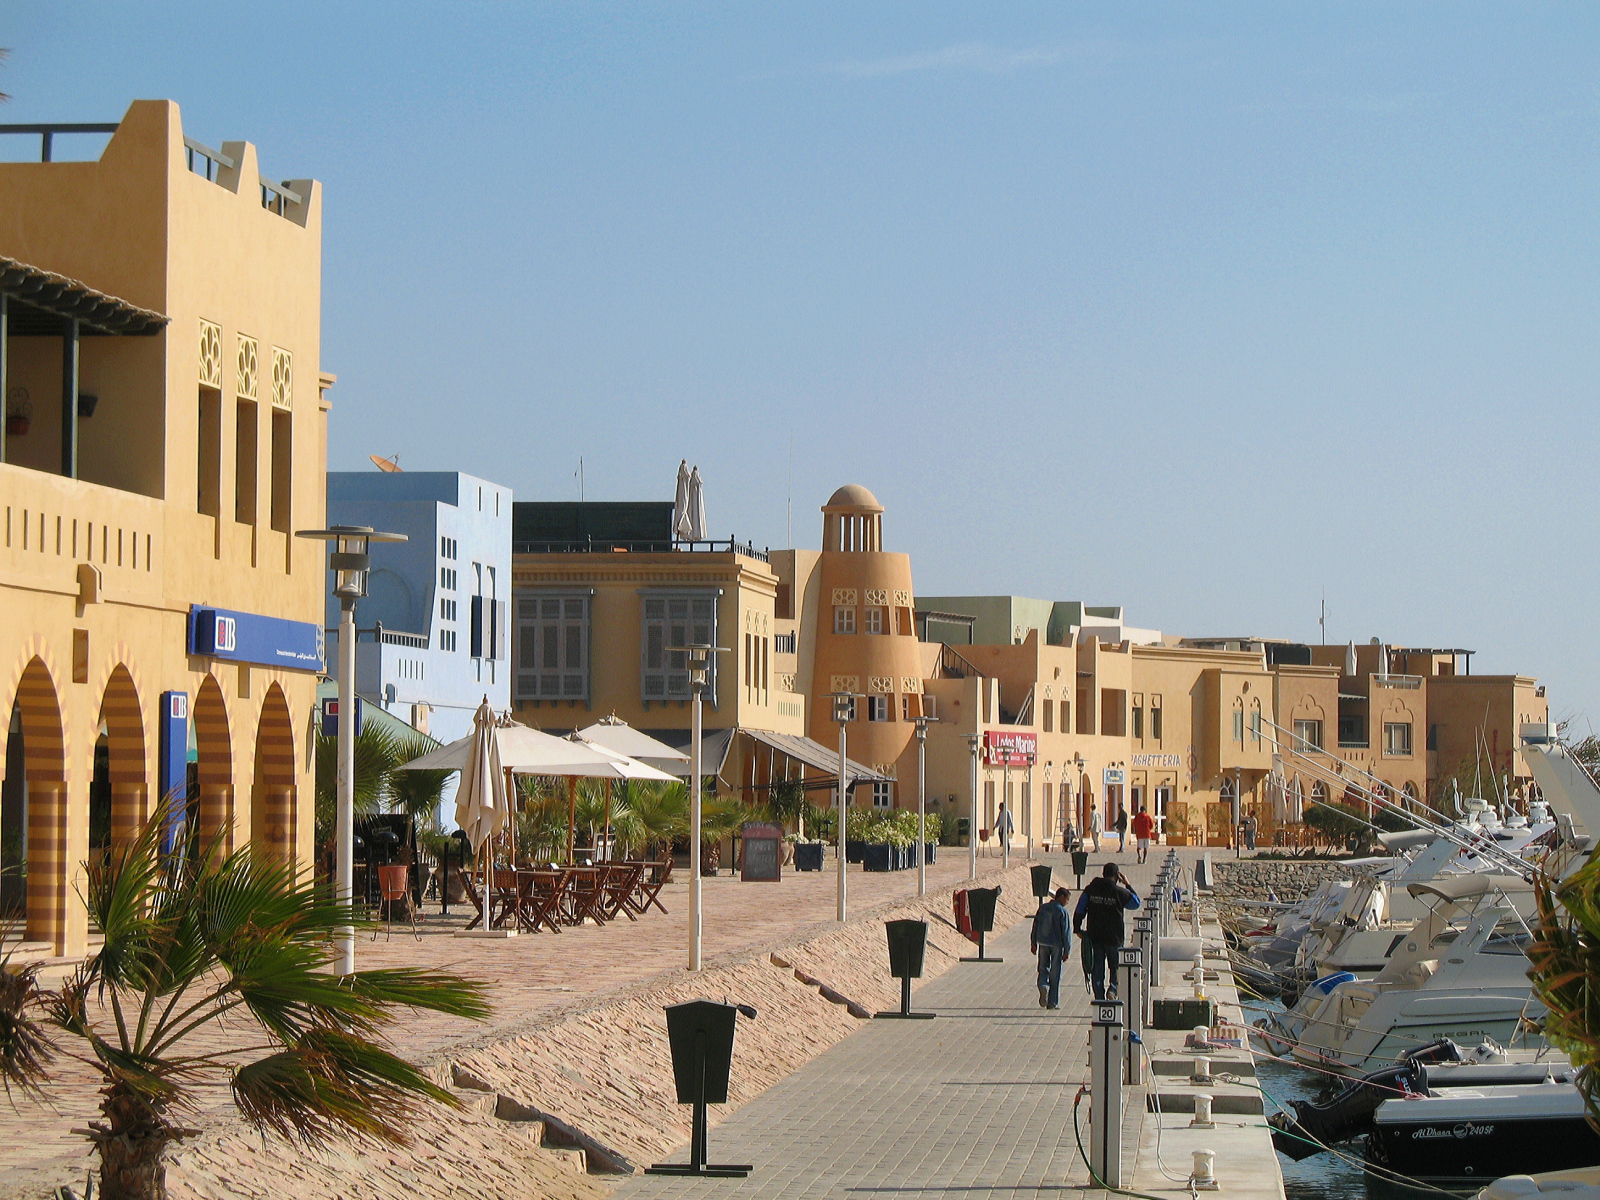 Walk along the promenade in the resort of Hurghada, Egypt